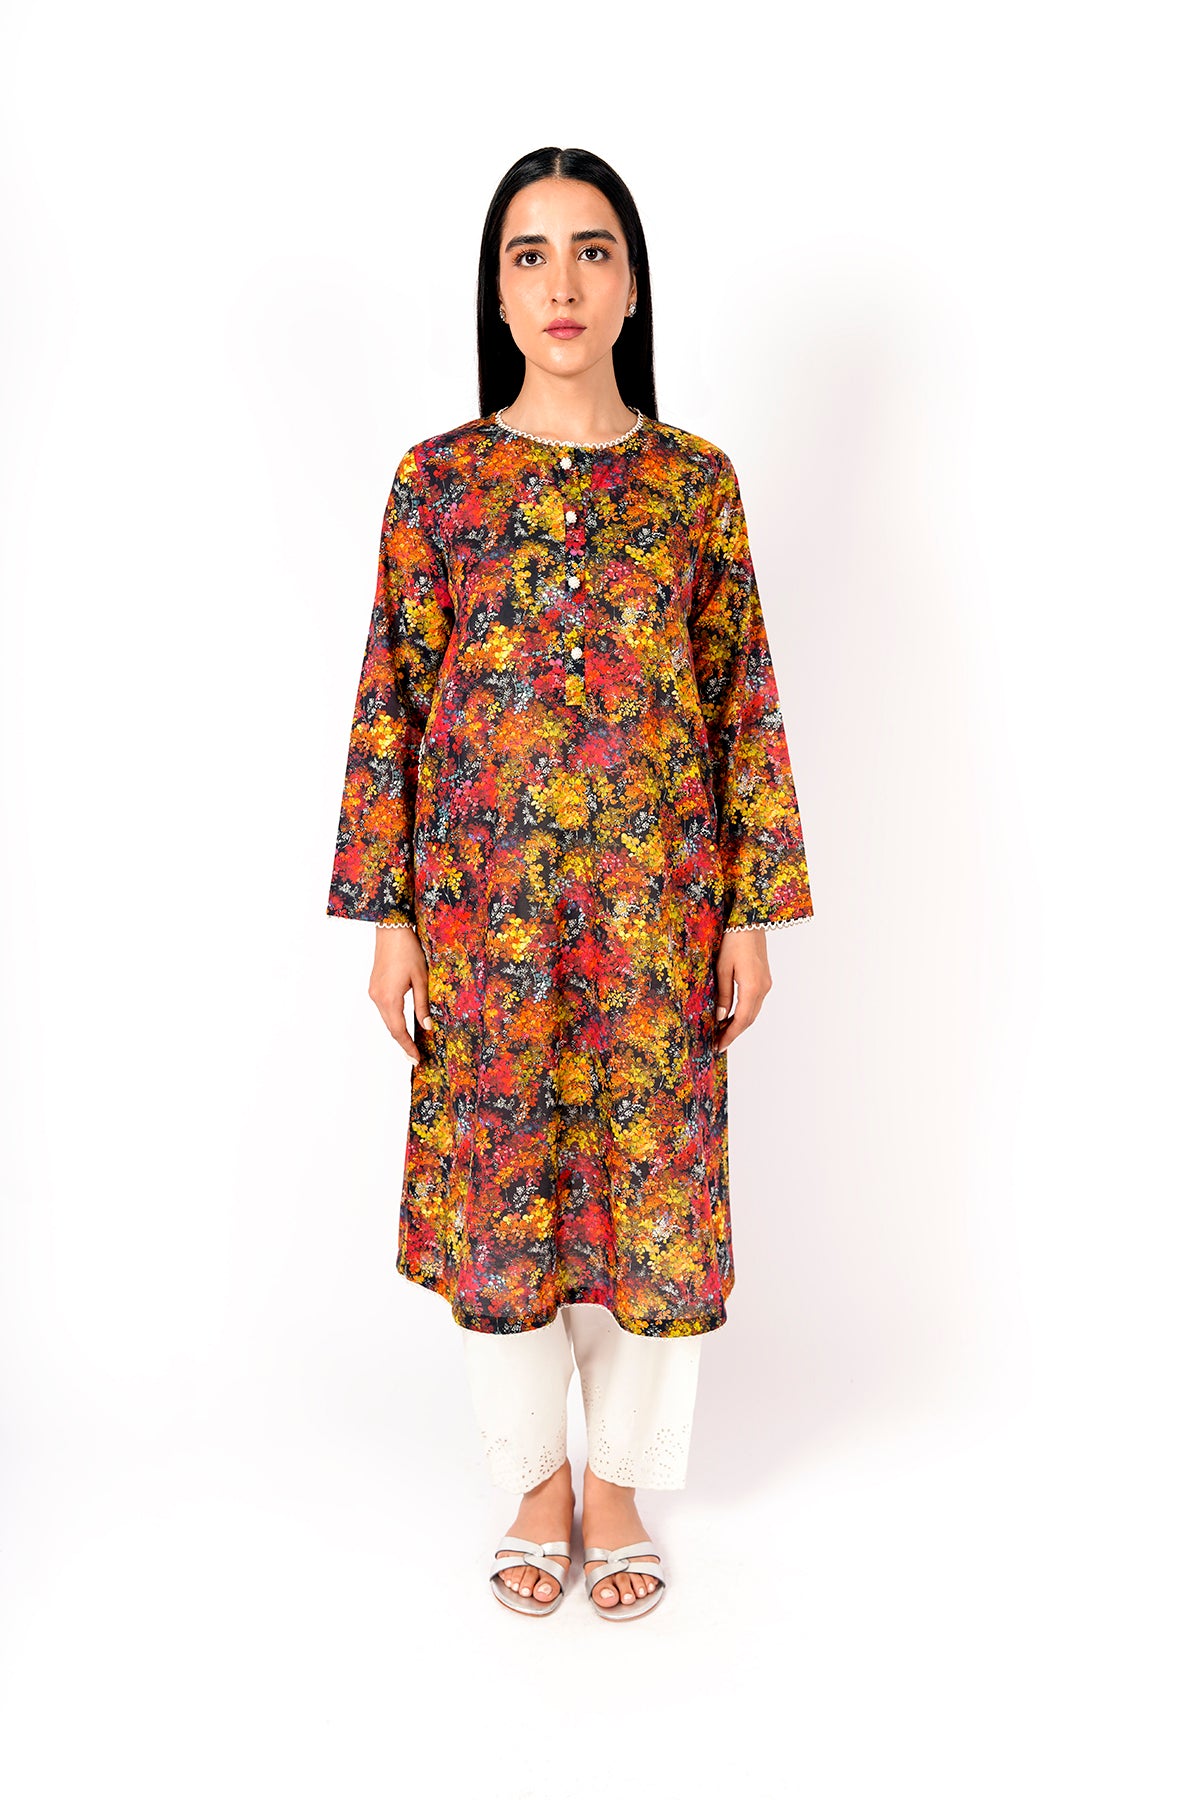 1 Piece Cotton Lawn Shirt – Kayseria Pakistan